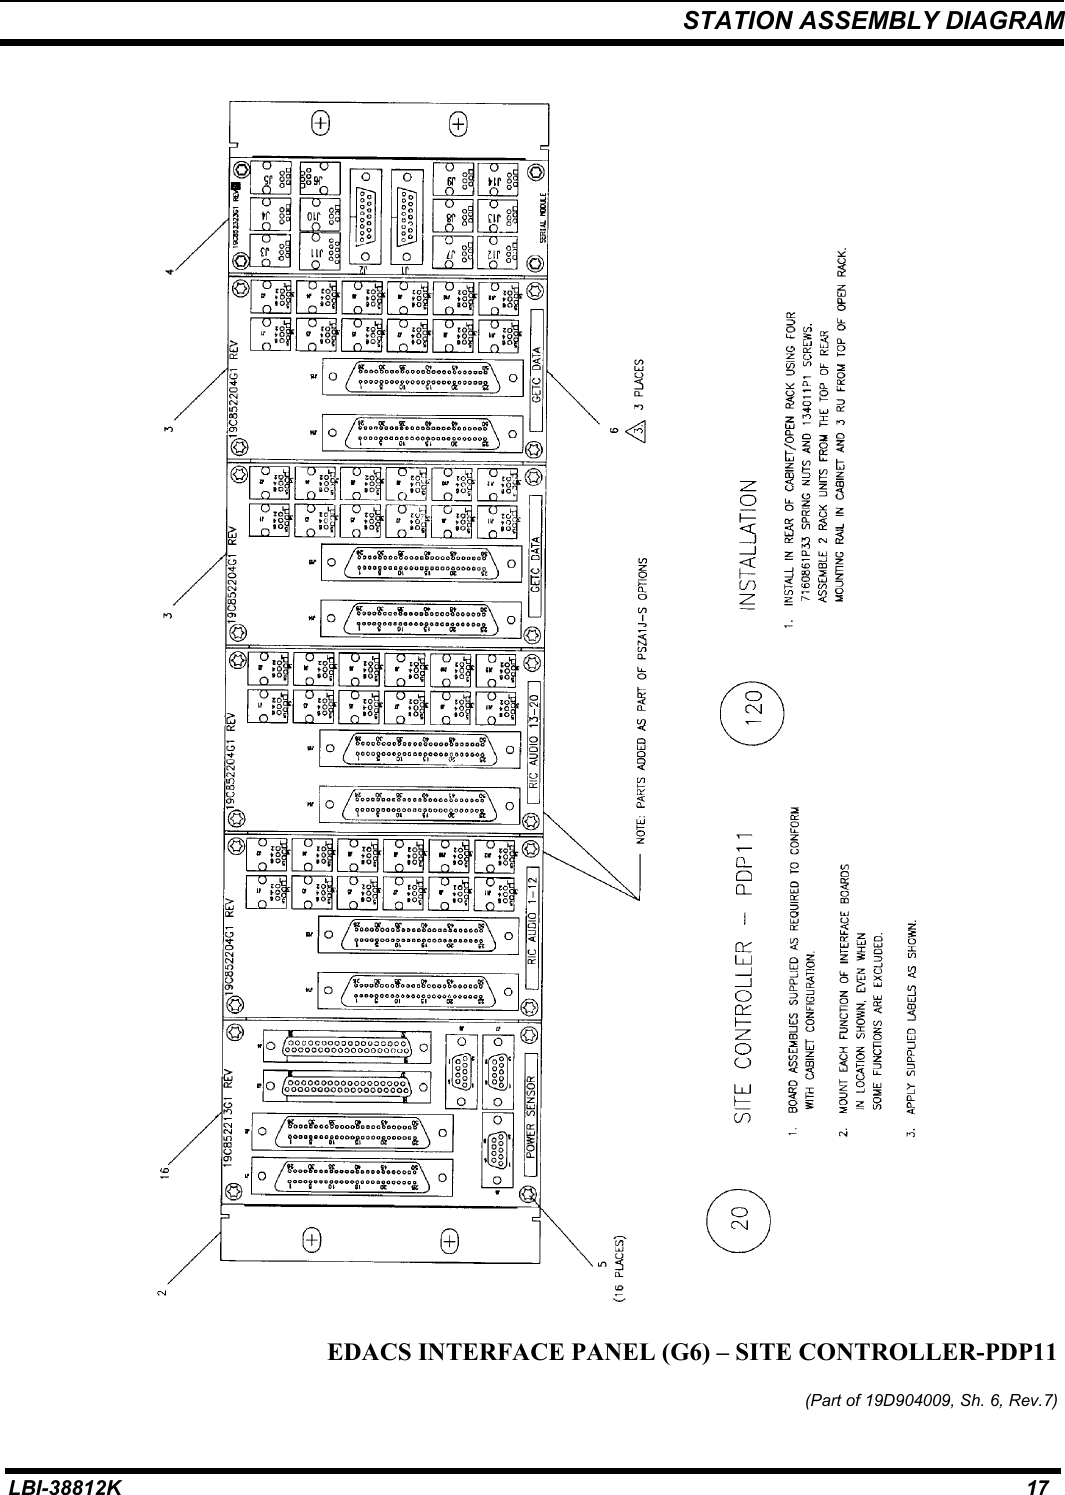 STATION ASSEMBLY DIAGRAMLBI-38812K 17EDACS INTERFACE PANEL (G6) – SITE CONTROLLER-PDP11(Part of 19D904009, Sh. 6, Rev.7)